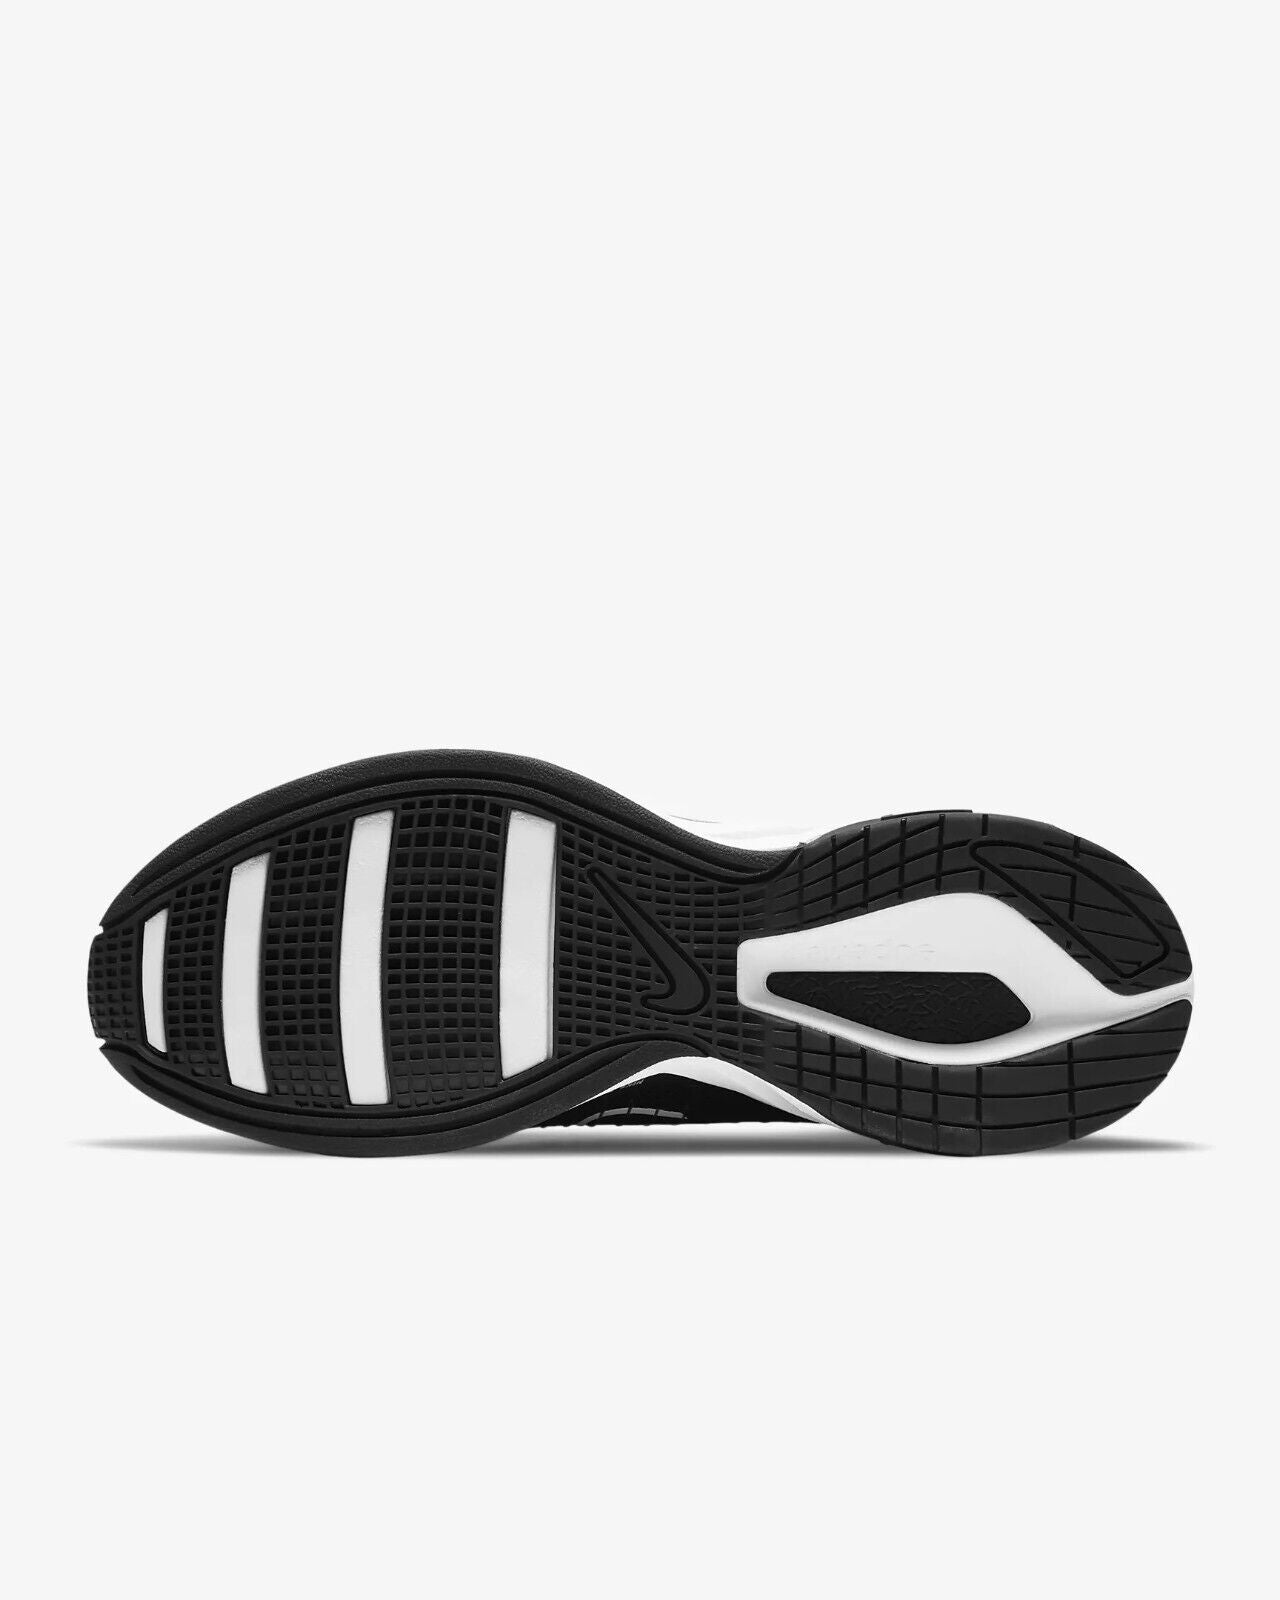 Women's Nike ZoomX SuperRep Surge Training Shoes, CK9406 001 Multi Sizes Black/Black/White